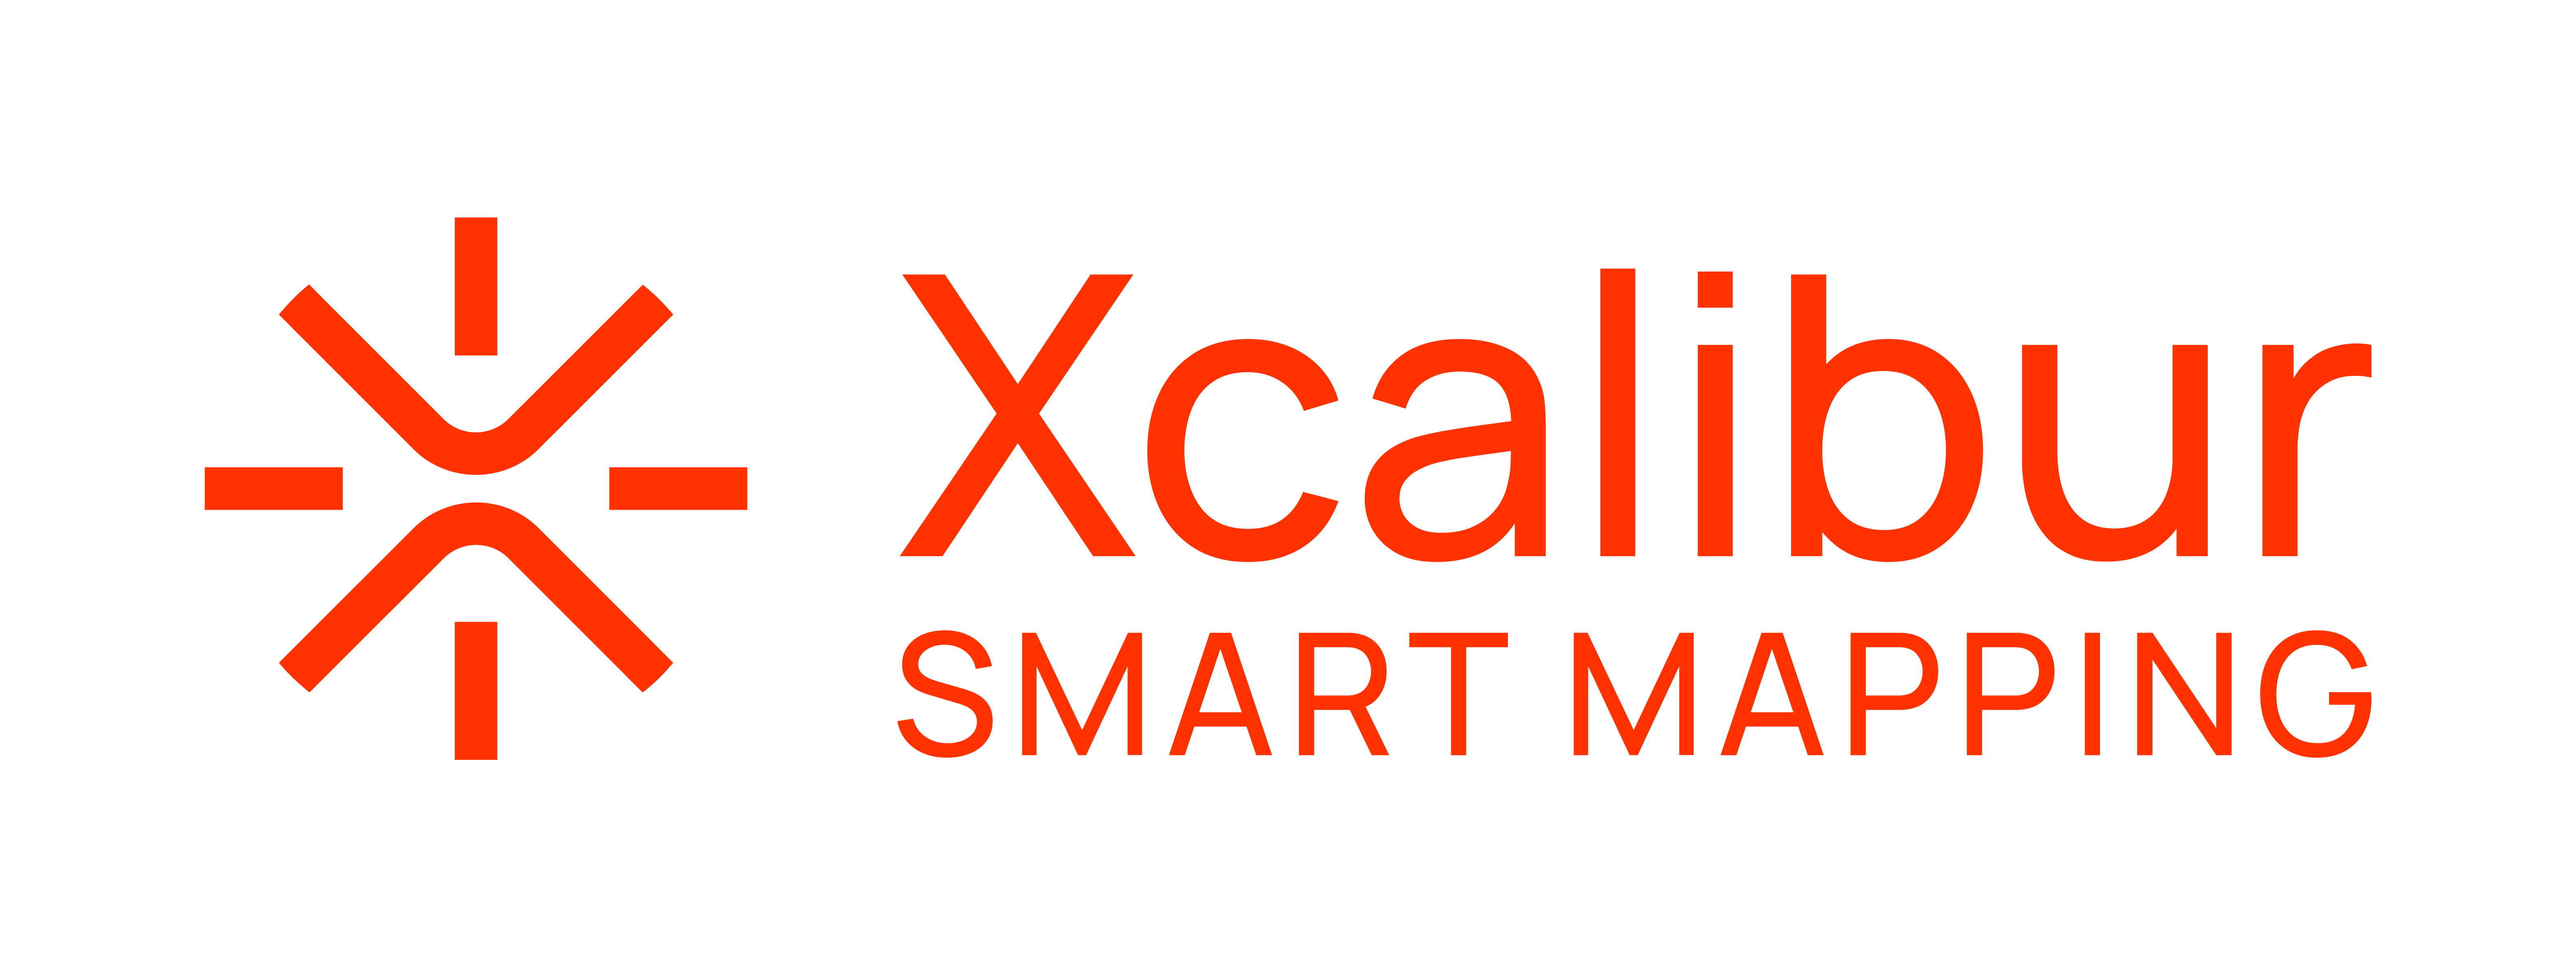 Xcalibur Smart Mapping